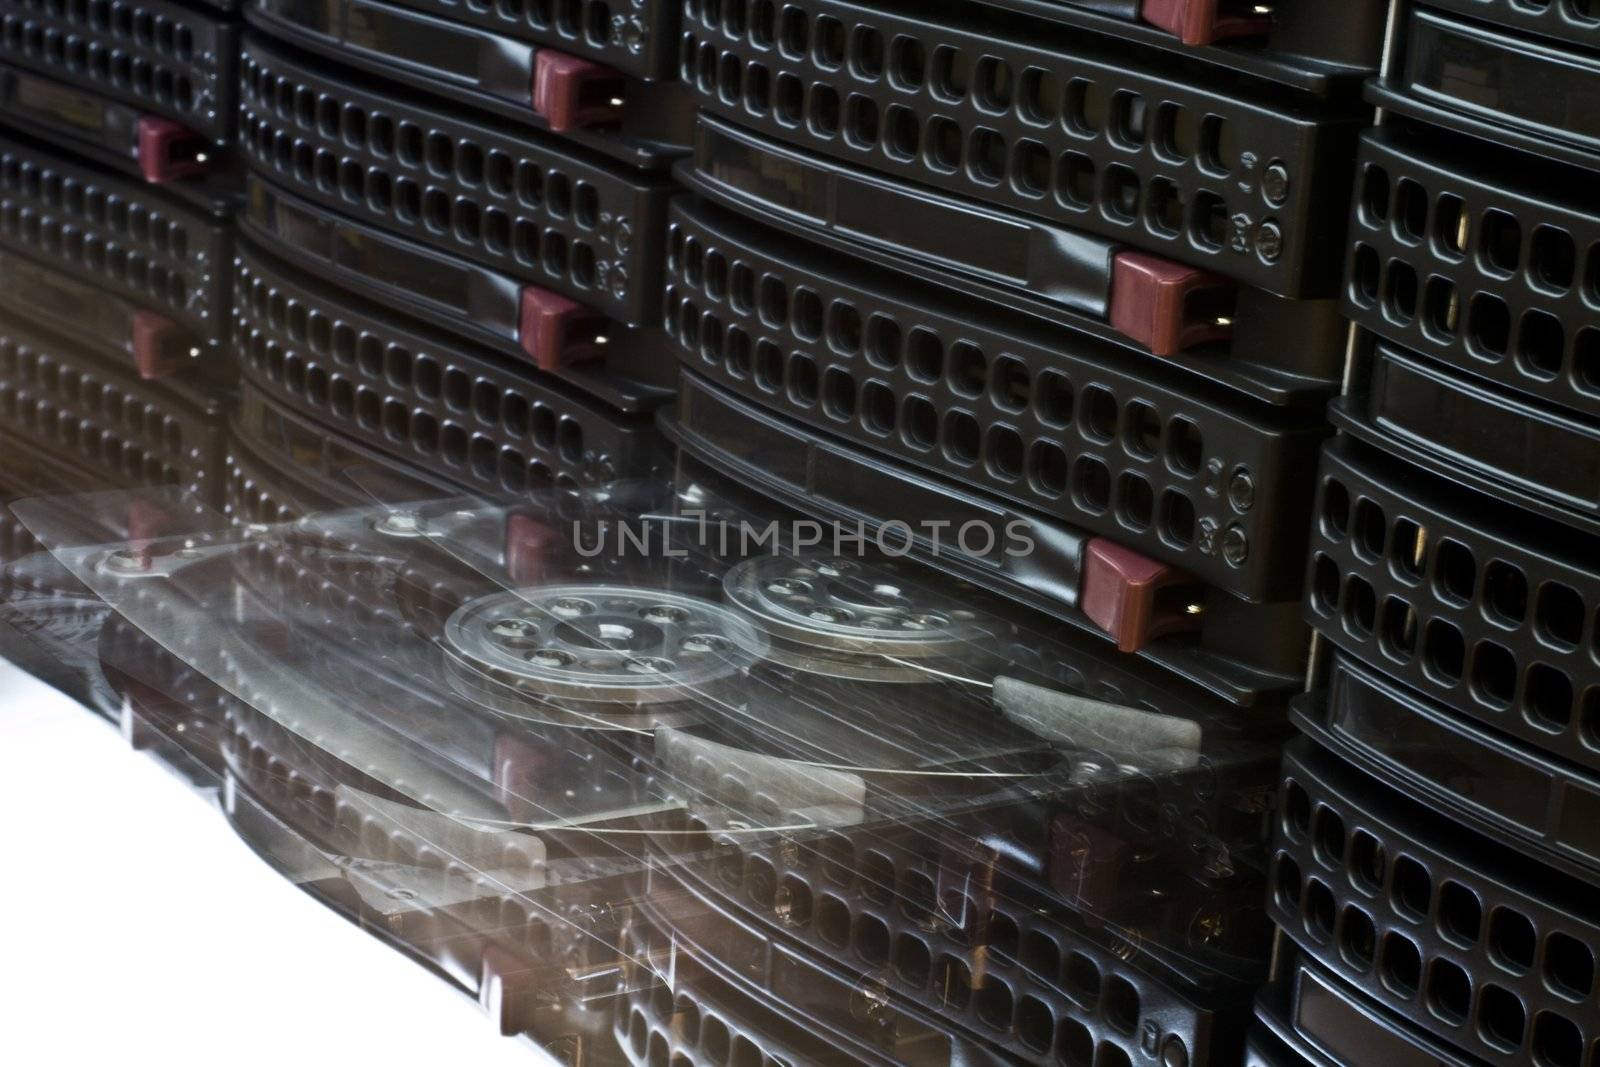 Open Hard Disk Drive in black hot swap frame. Nice reflection on platter.